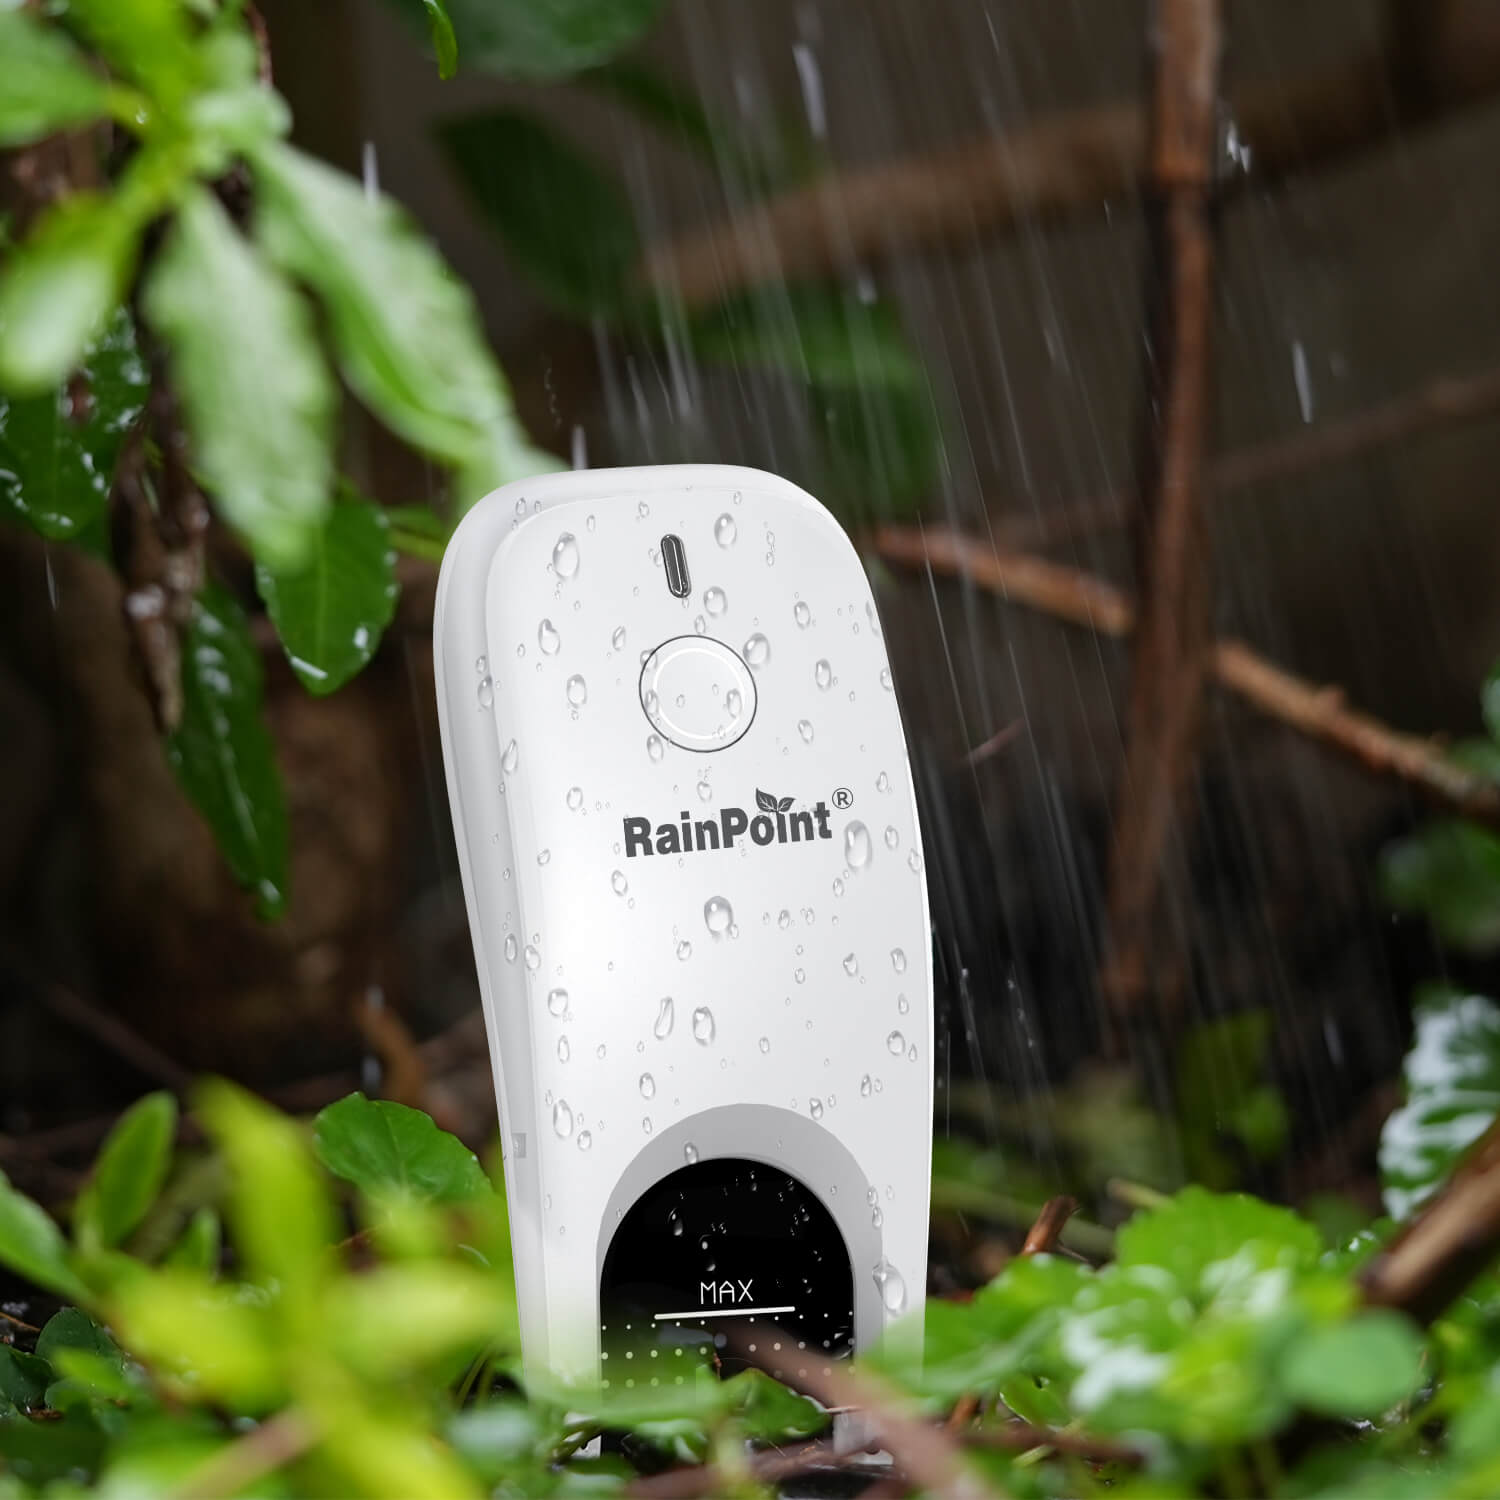 RainPoint Smart + Soil&amp; Moisture Sensor Model No: HCS021- Soil Sensor Only, Must be Used with HIS019 WiFi Hub, 2.4Ghz WiFi Only